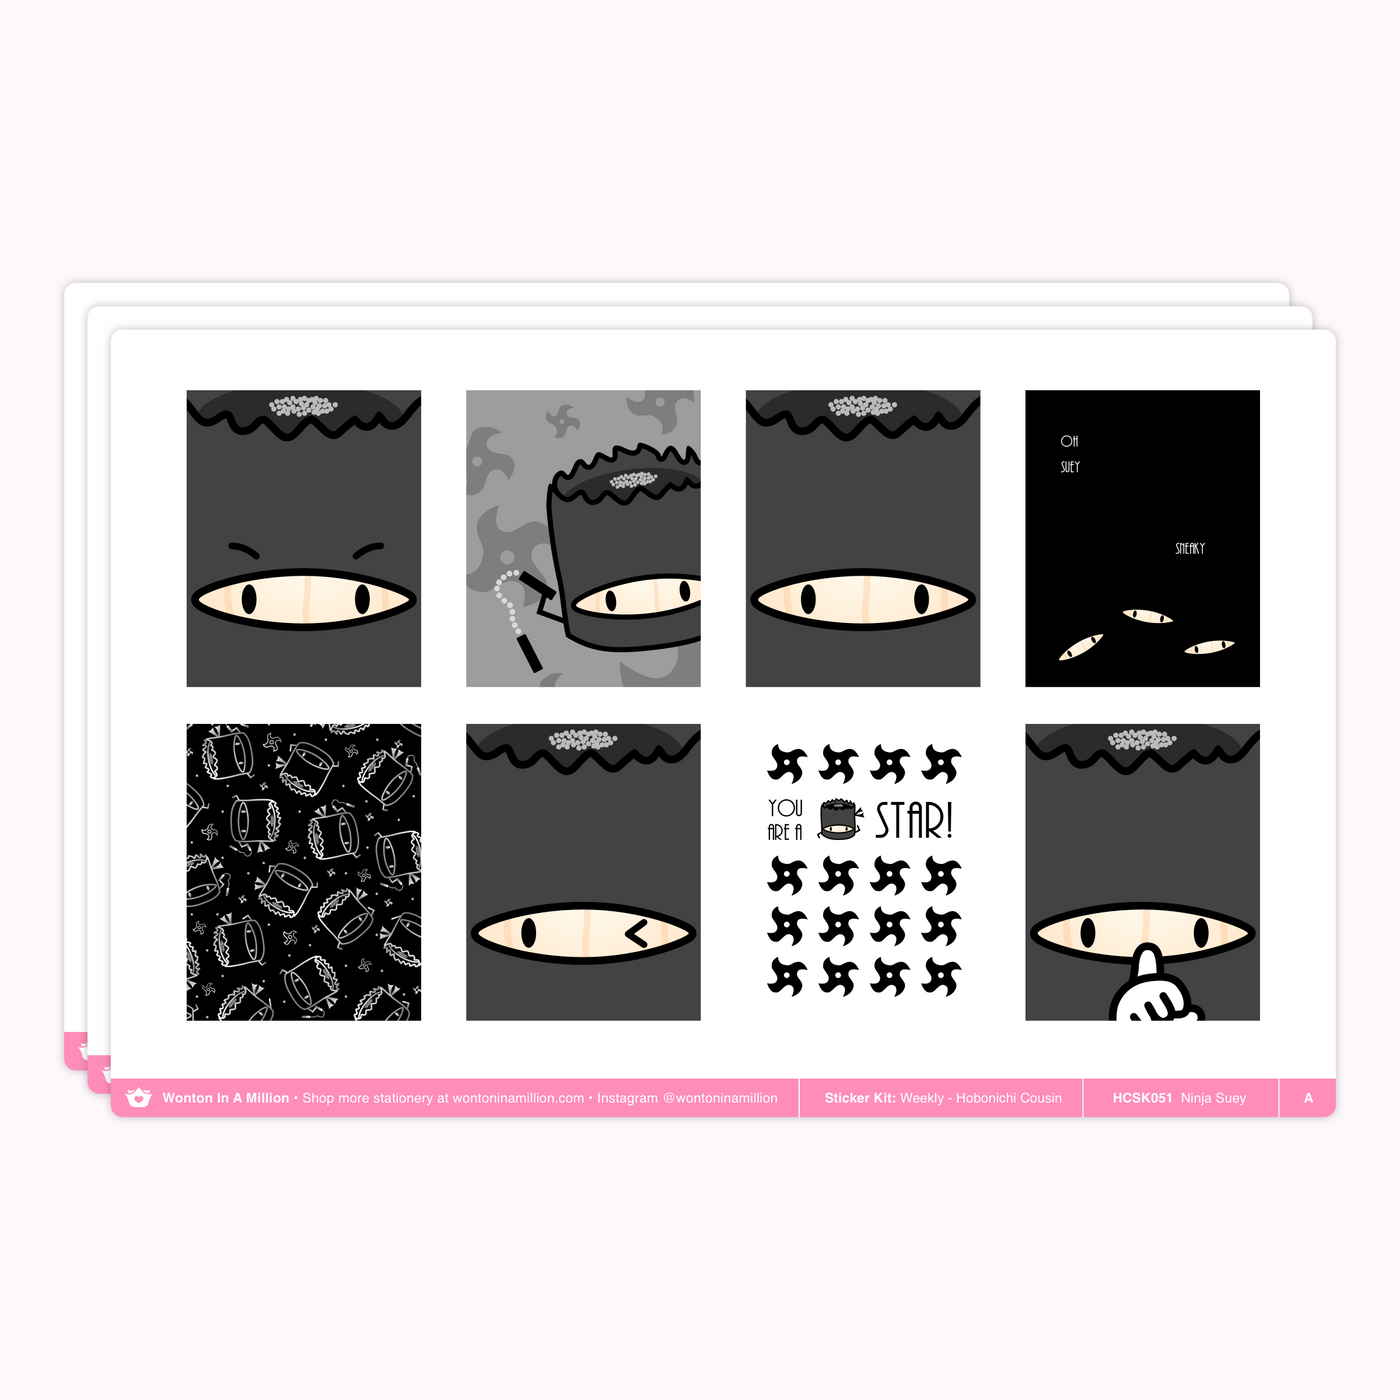 Ninja Weekly Sticker Kit (Hobonichi Cousin)